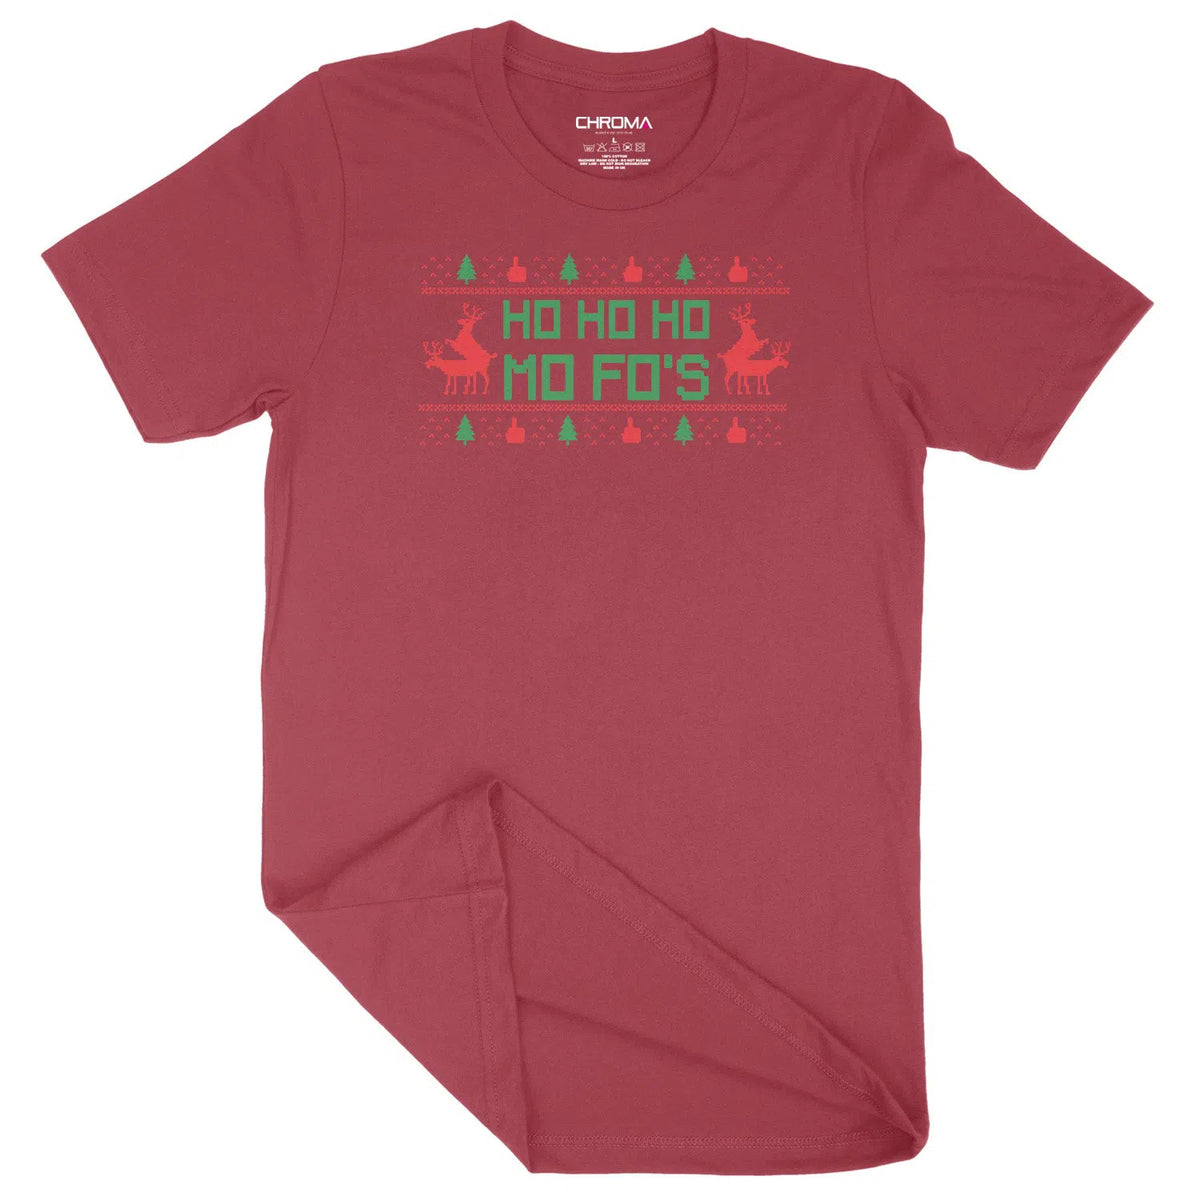 Ho Ho Mo Fo's | Unisex Christmas T-Shirt Chroma Clothing